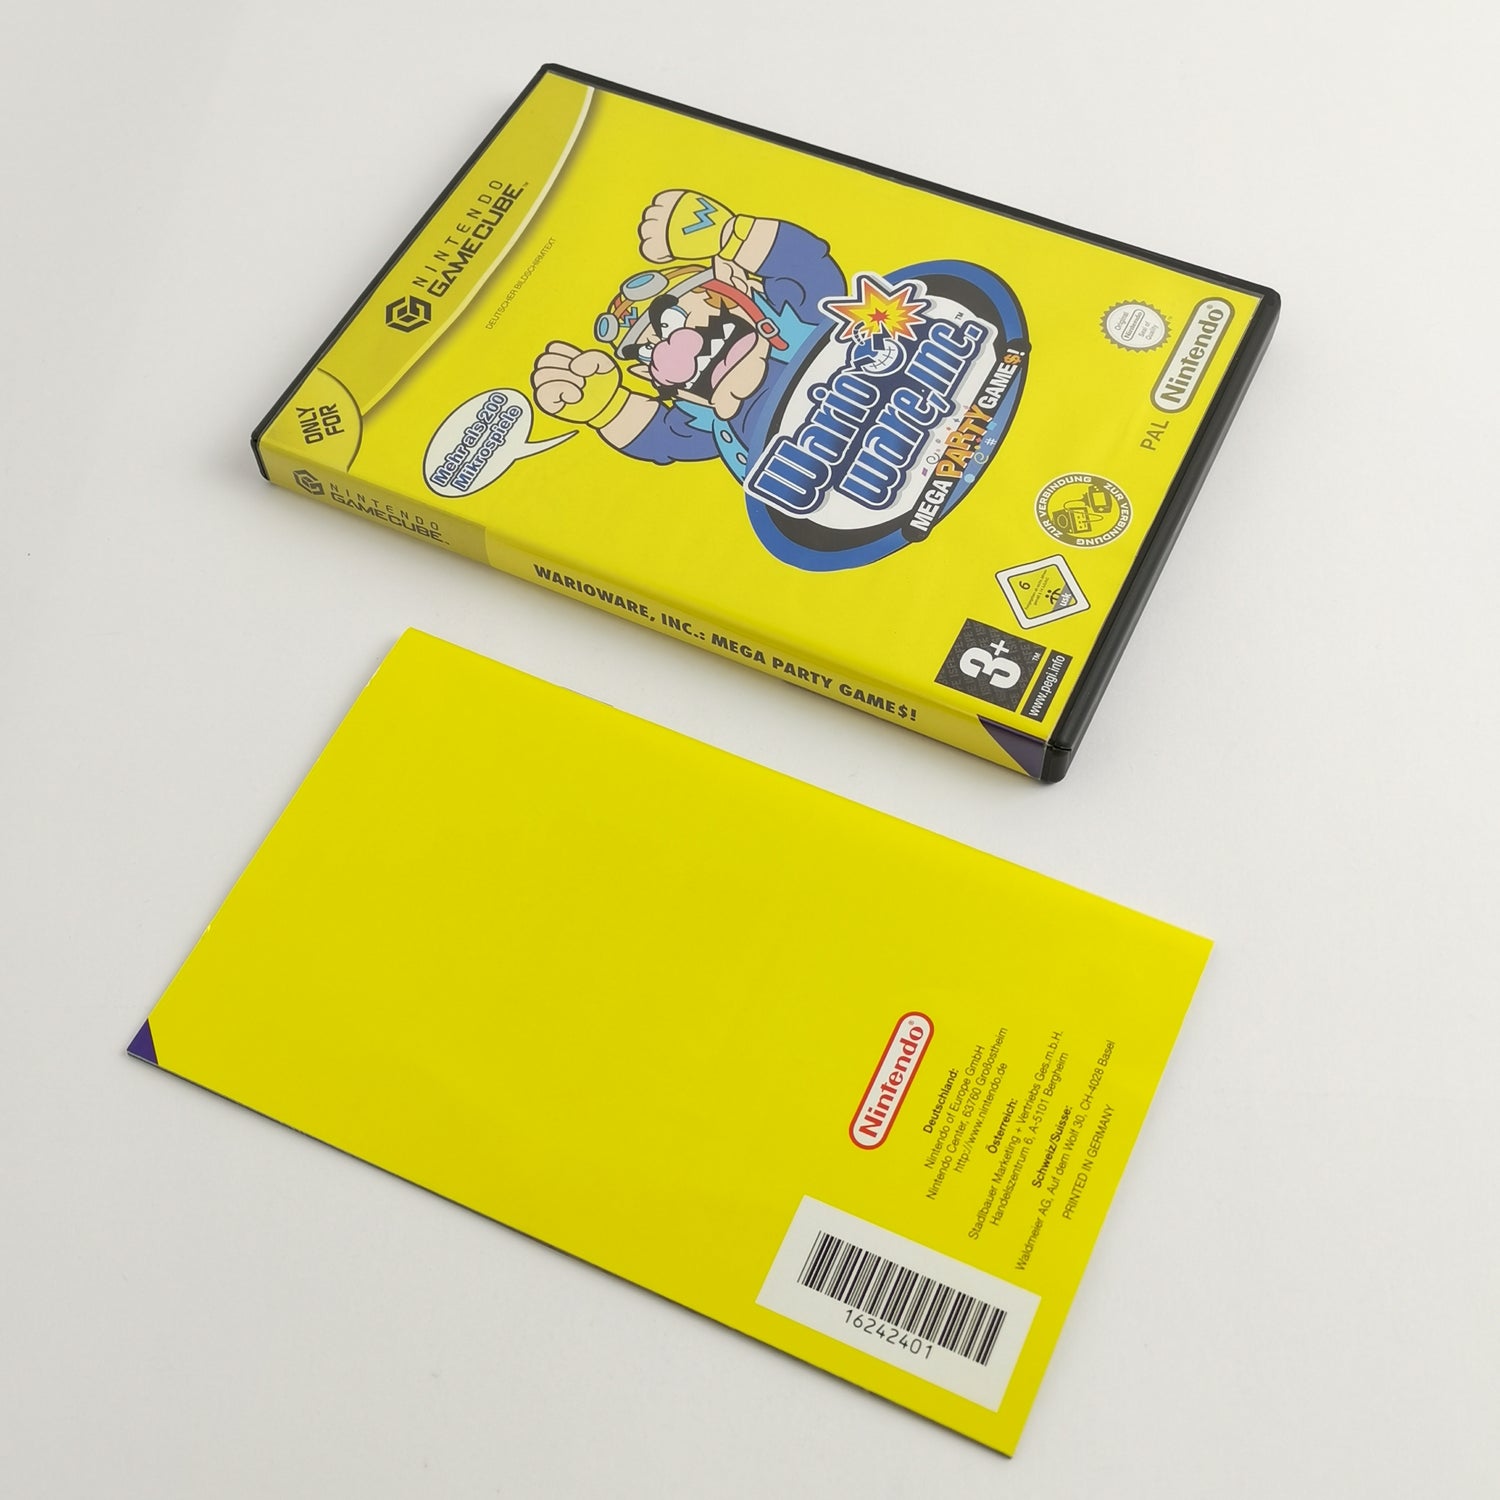 Nintendo Gamecube game: Wario Ware Inc. Mega Party Game$ original packaging - condition selectable